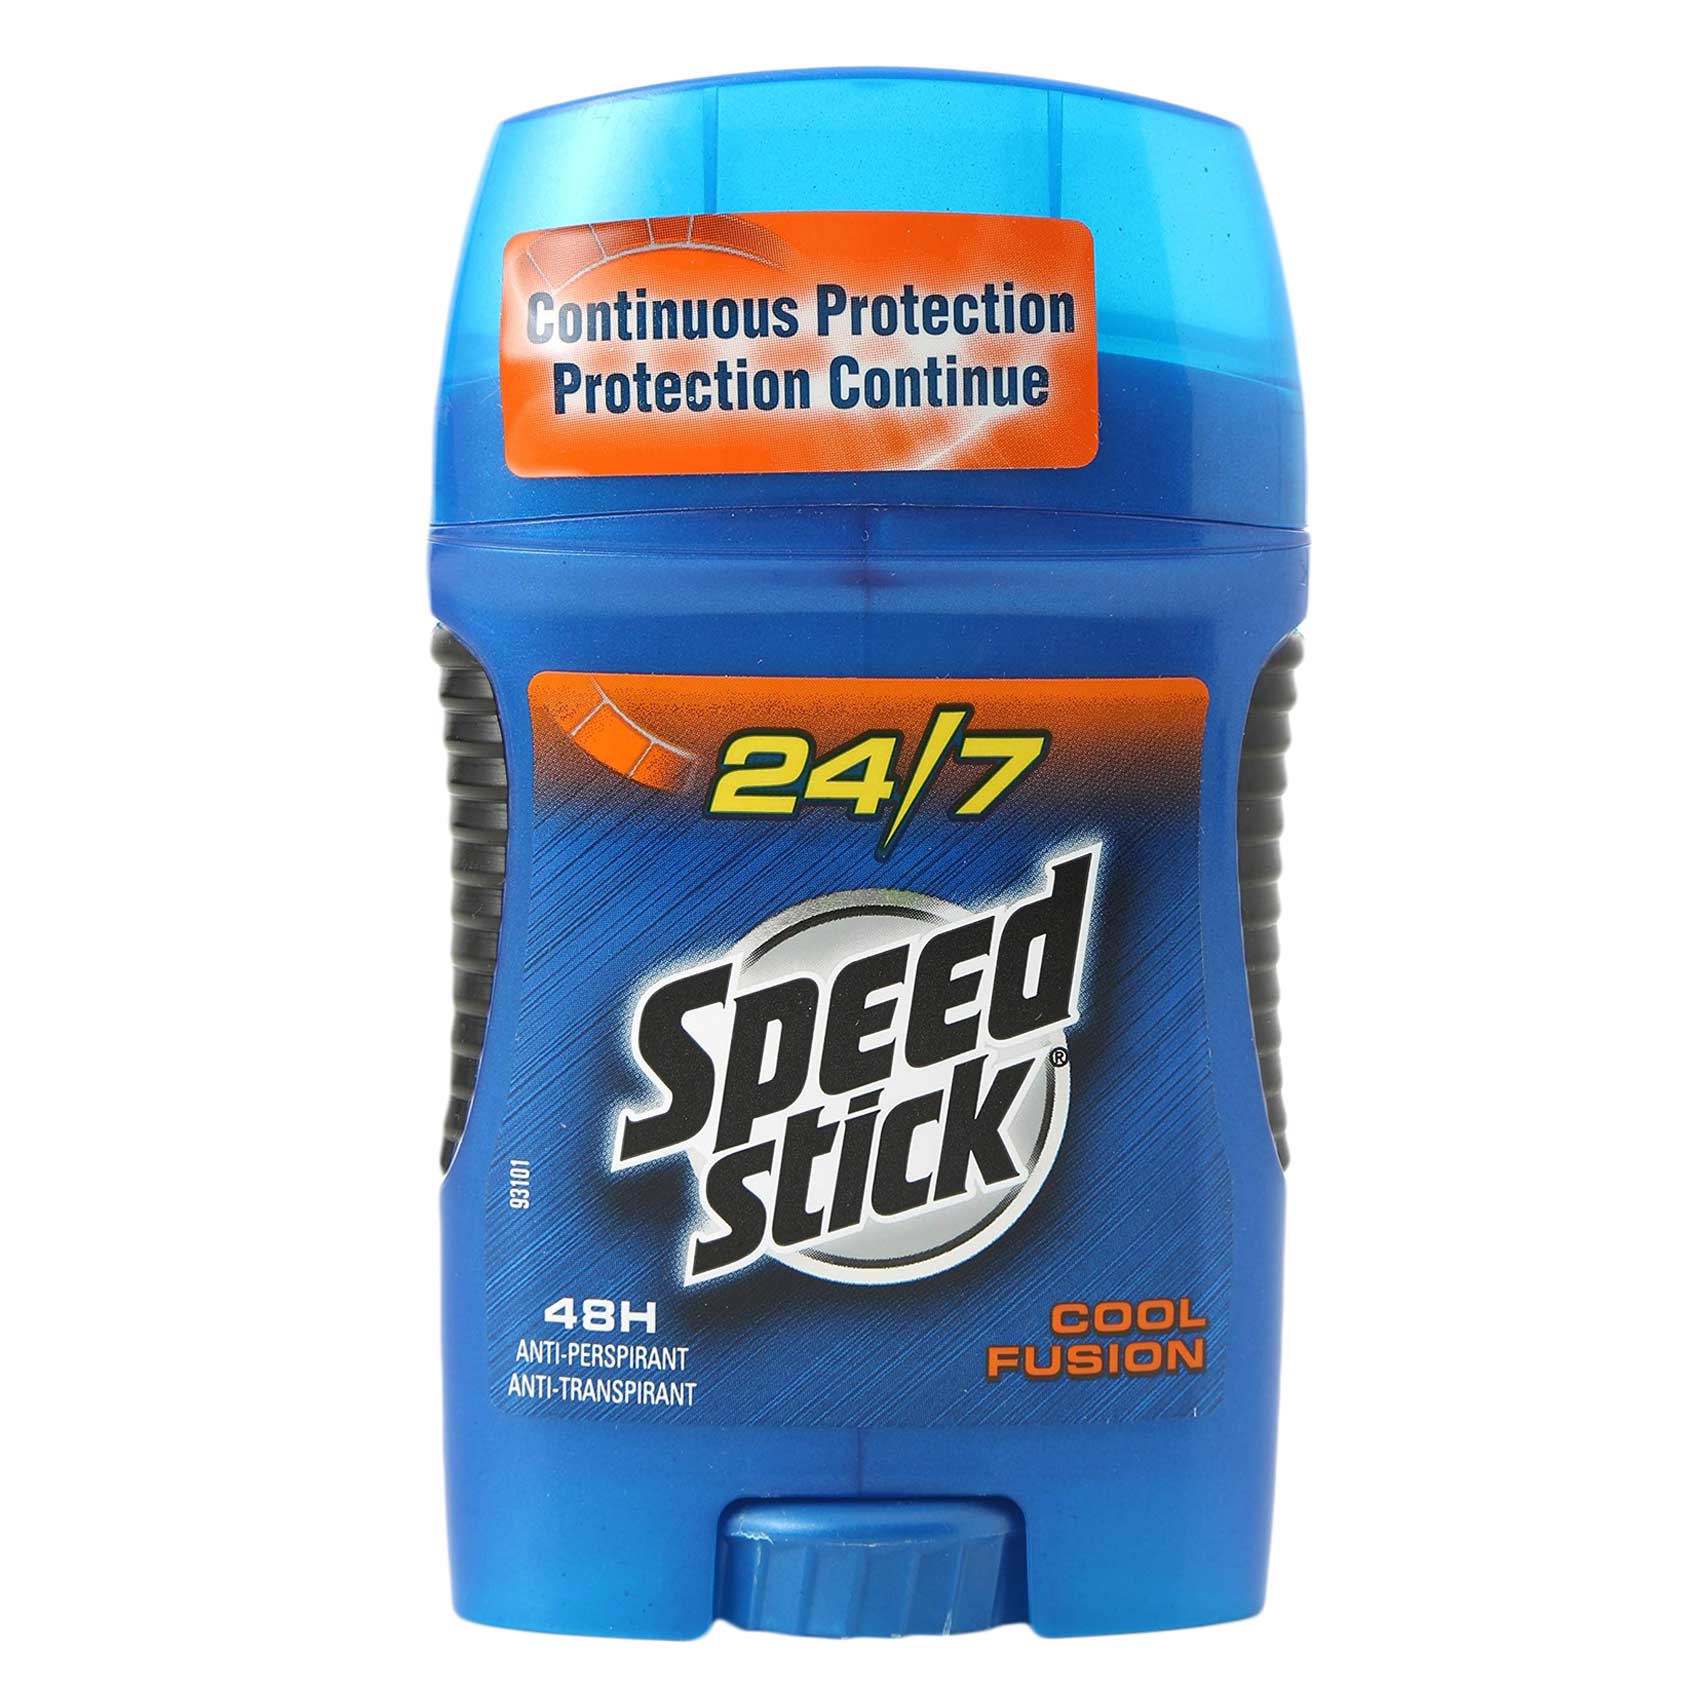 Speed Stick 24/7 Cool Fusion Anti Per-spirant Deodorant 50g